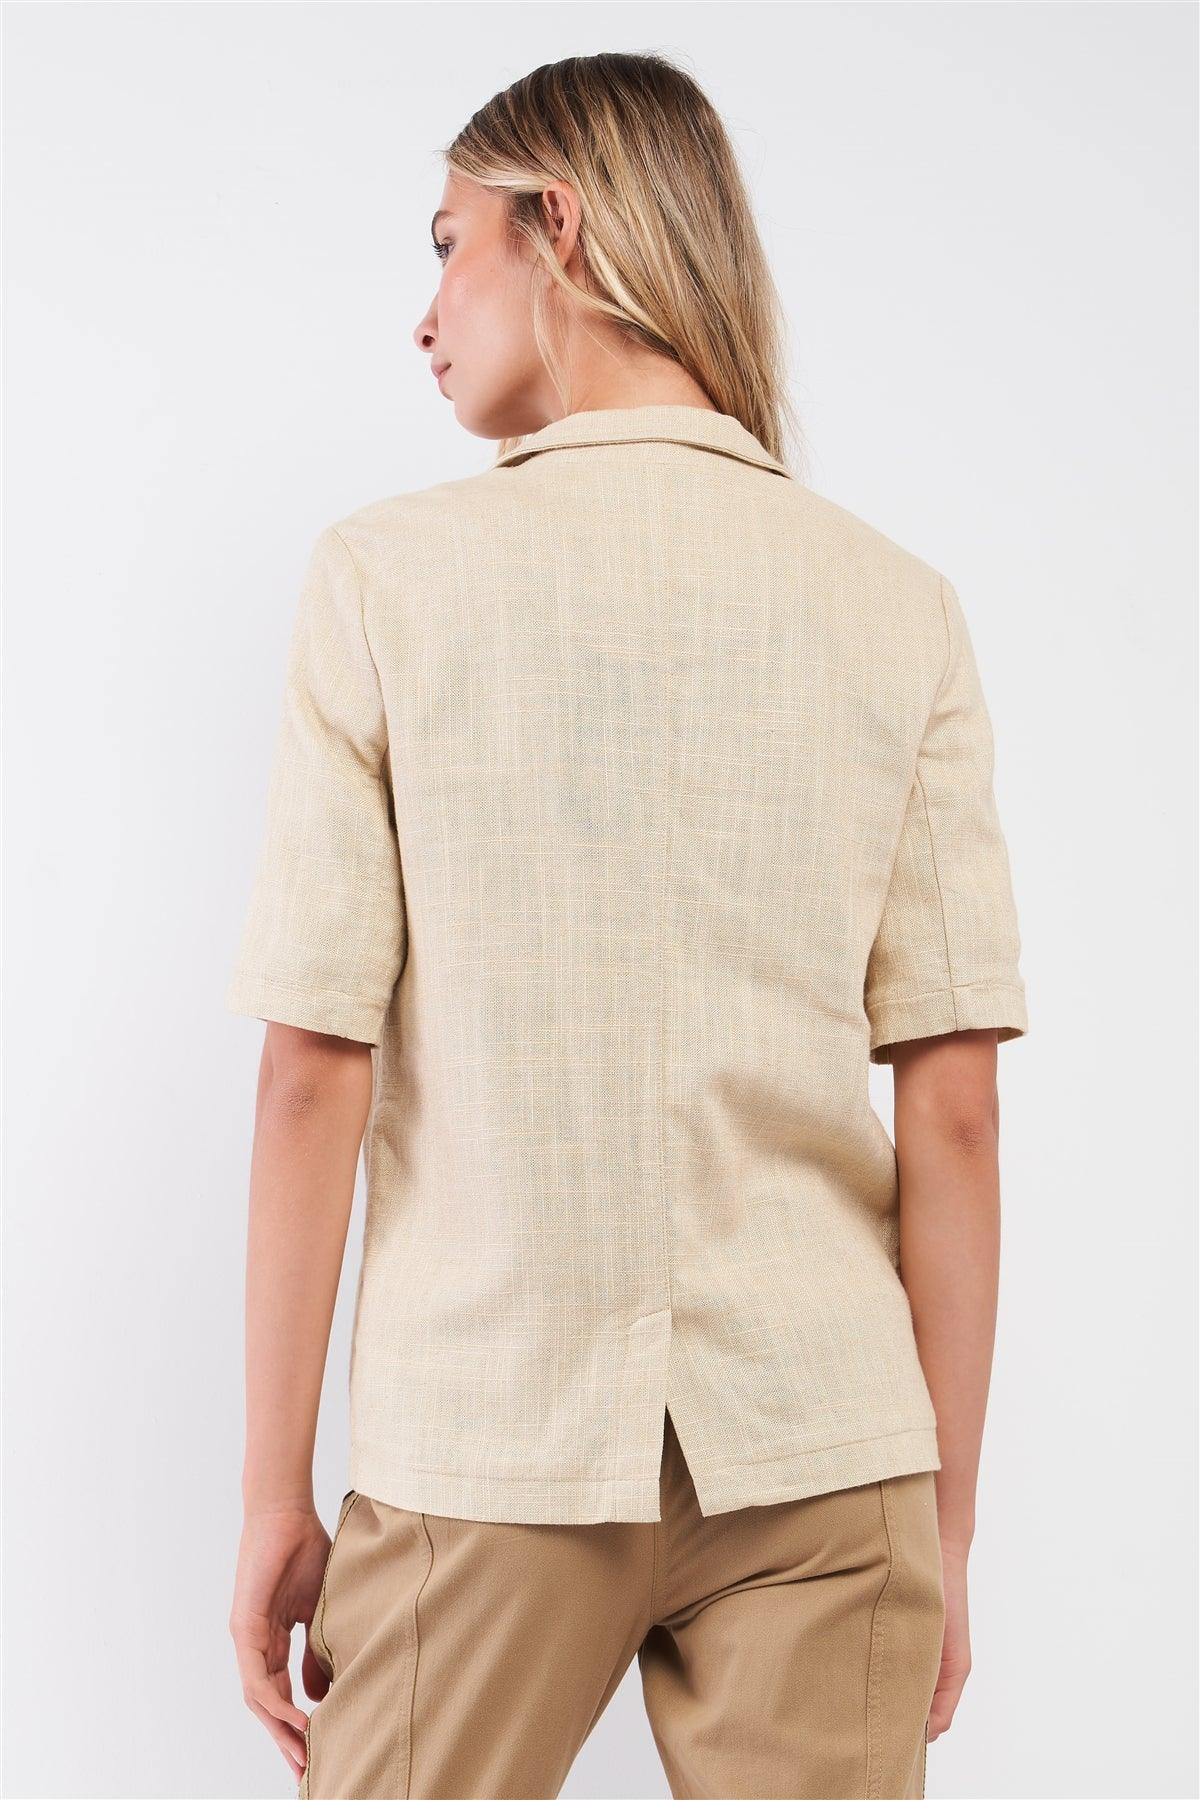 Ecru Linen Short Half-Sleeve Single-Breasted Blazer Jacket